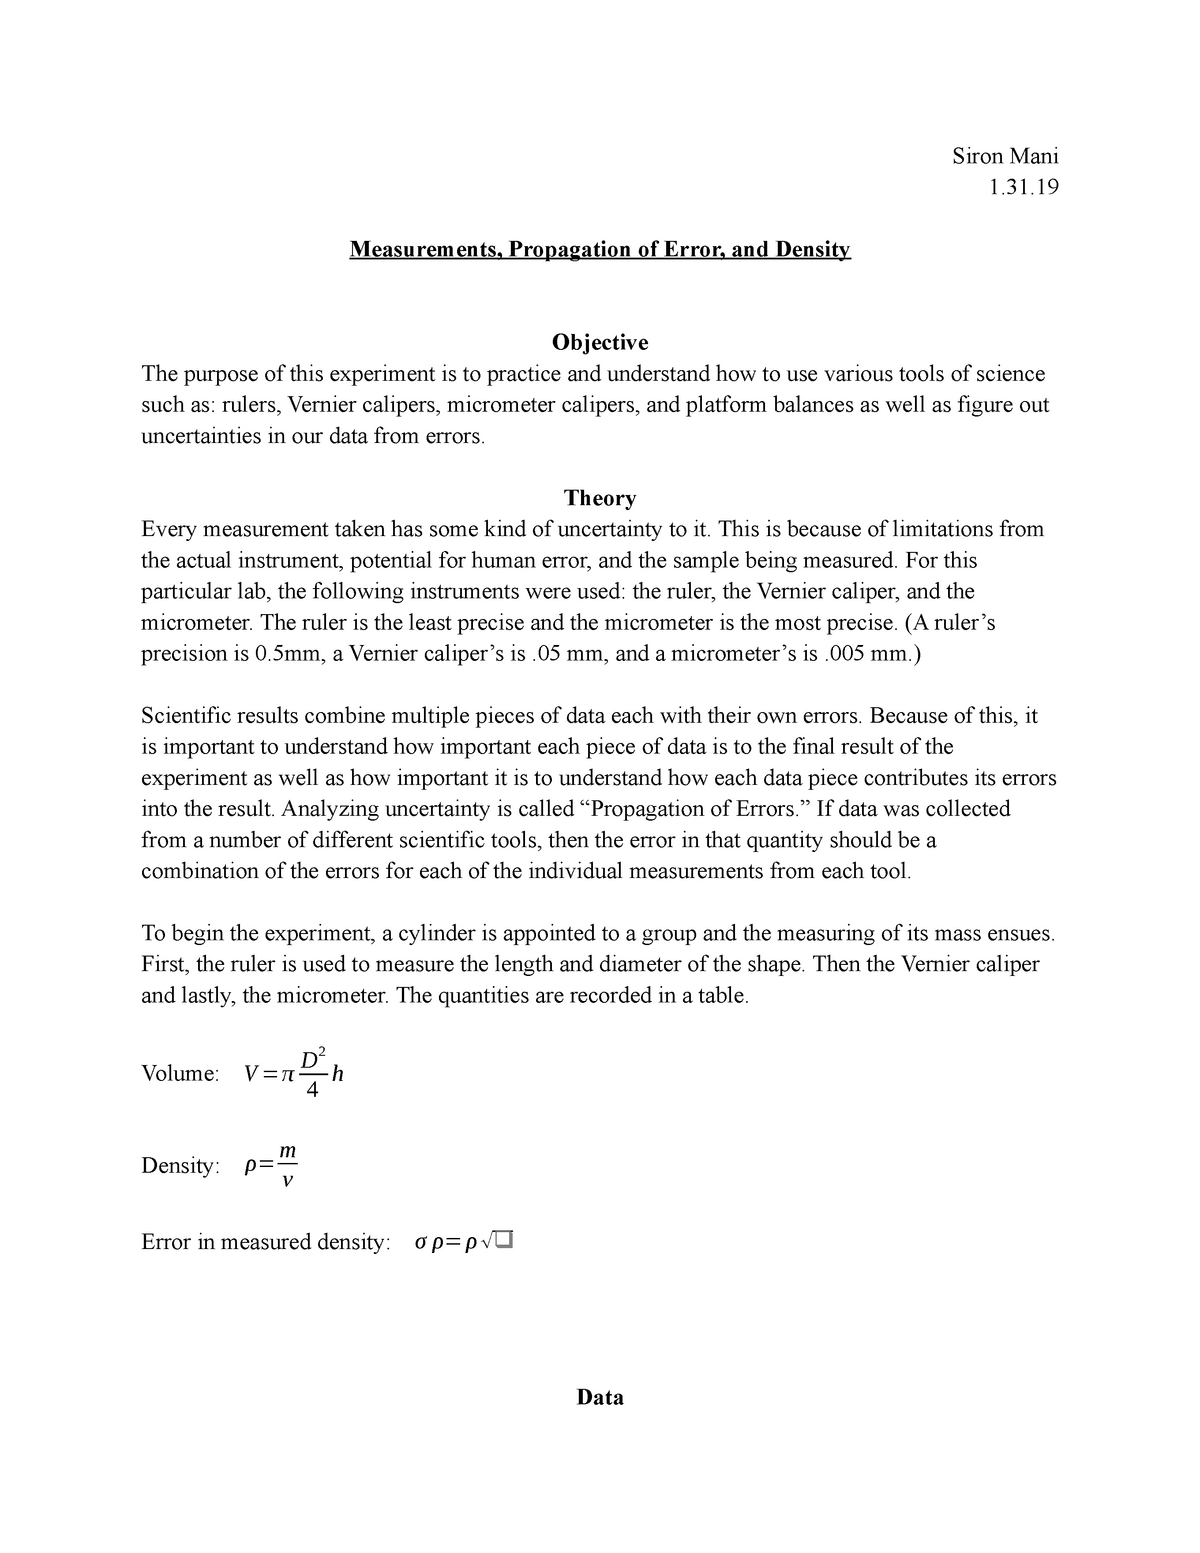 Physics Lab Report 1 Measurements Siron Mani 1 Measurements Propagation Of Error And 3560